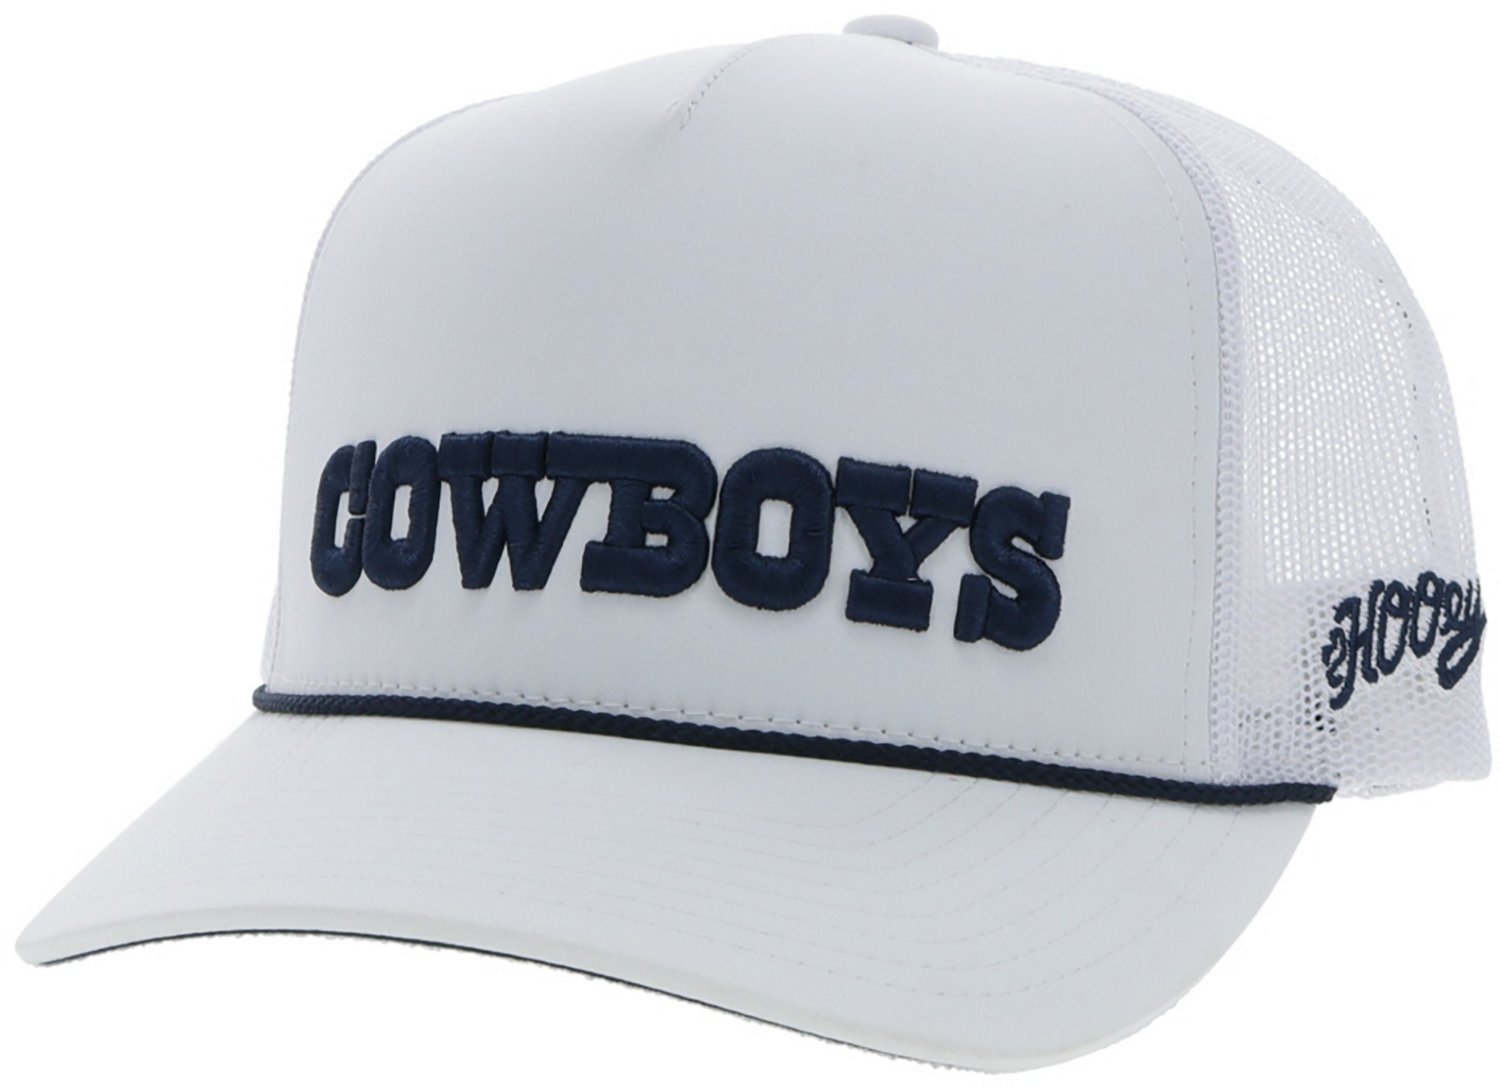 youth dallas cowboys hat